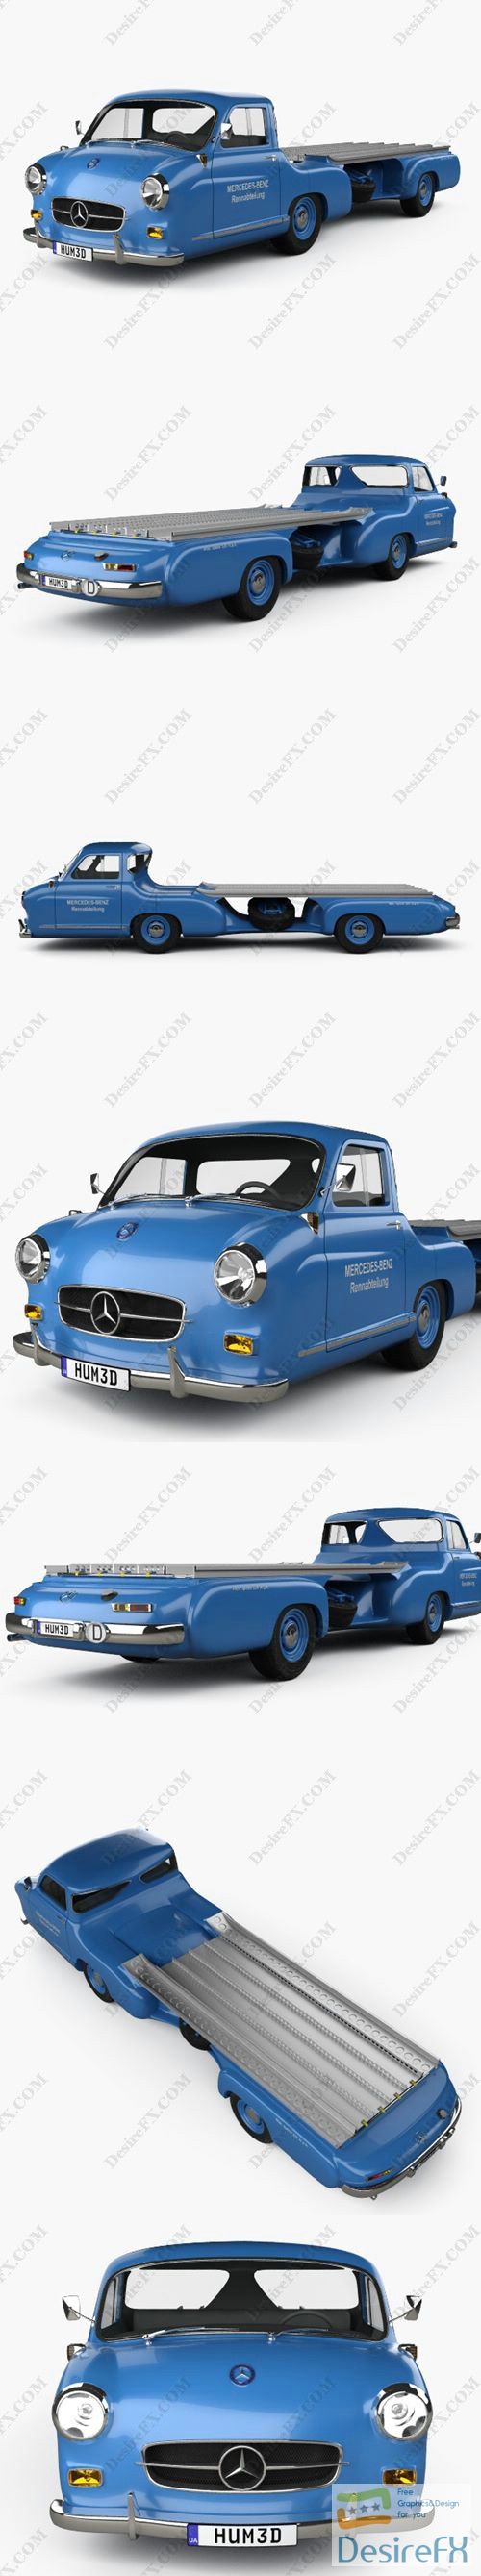 Mercedes-Benz Blue Wonder Renntransporter 1954 3D Model